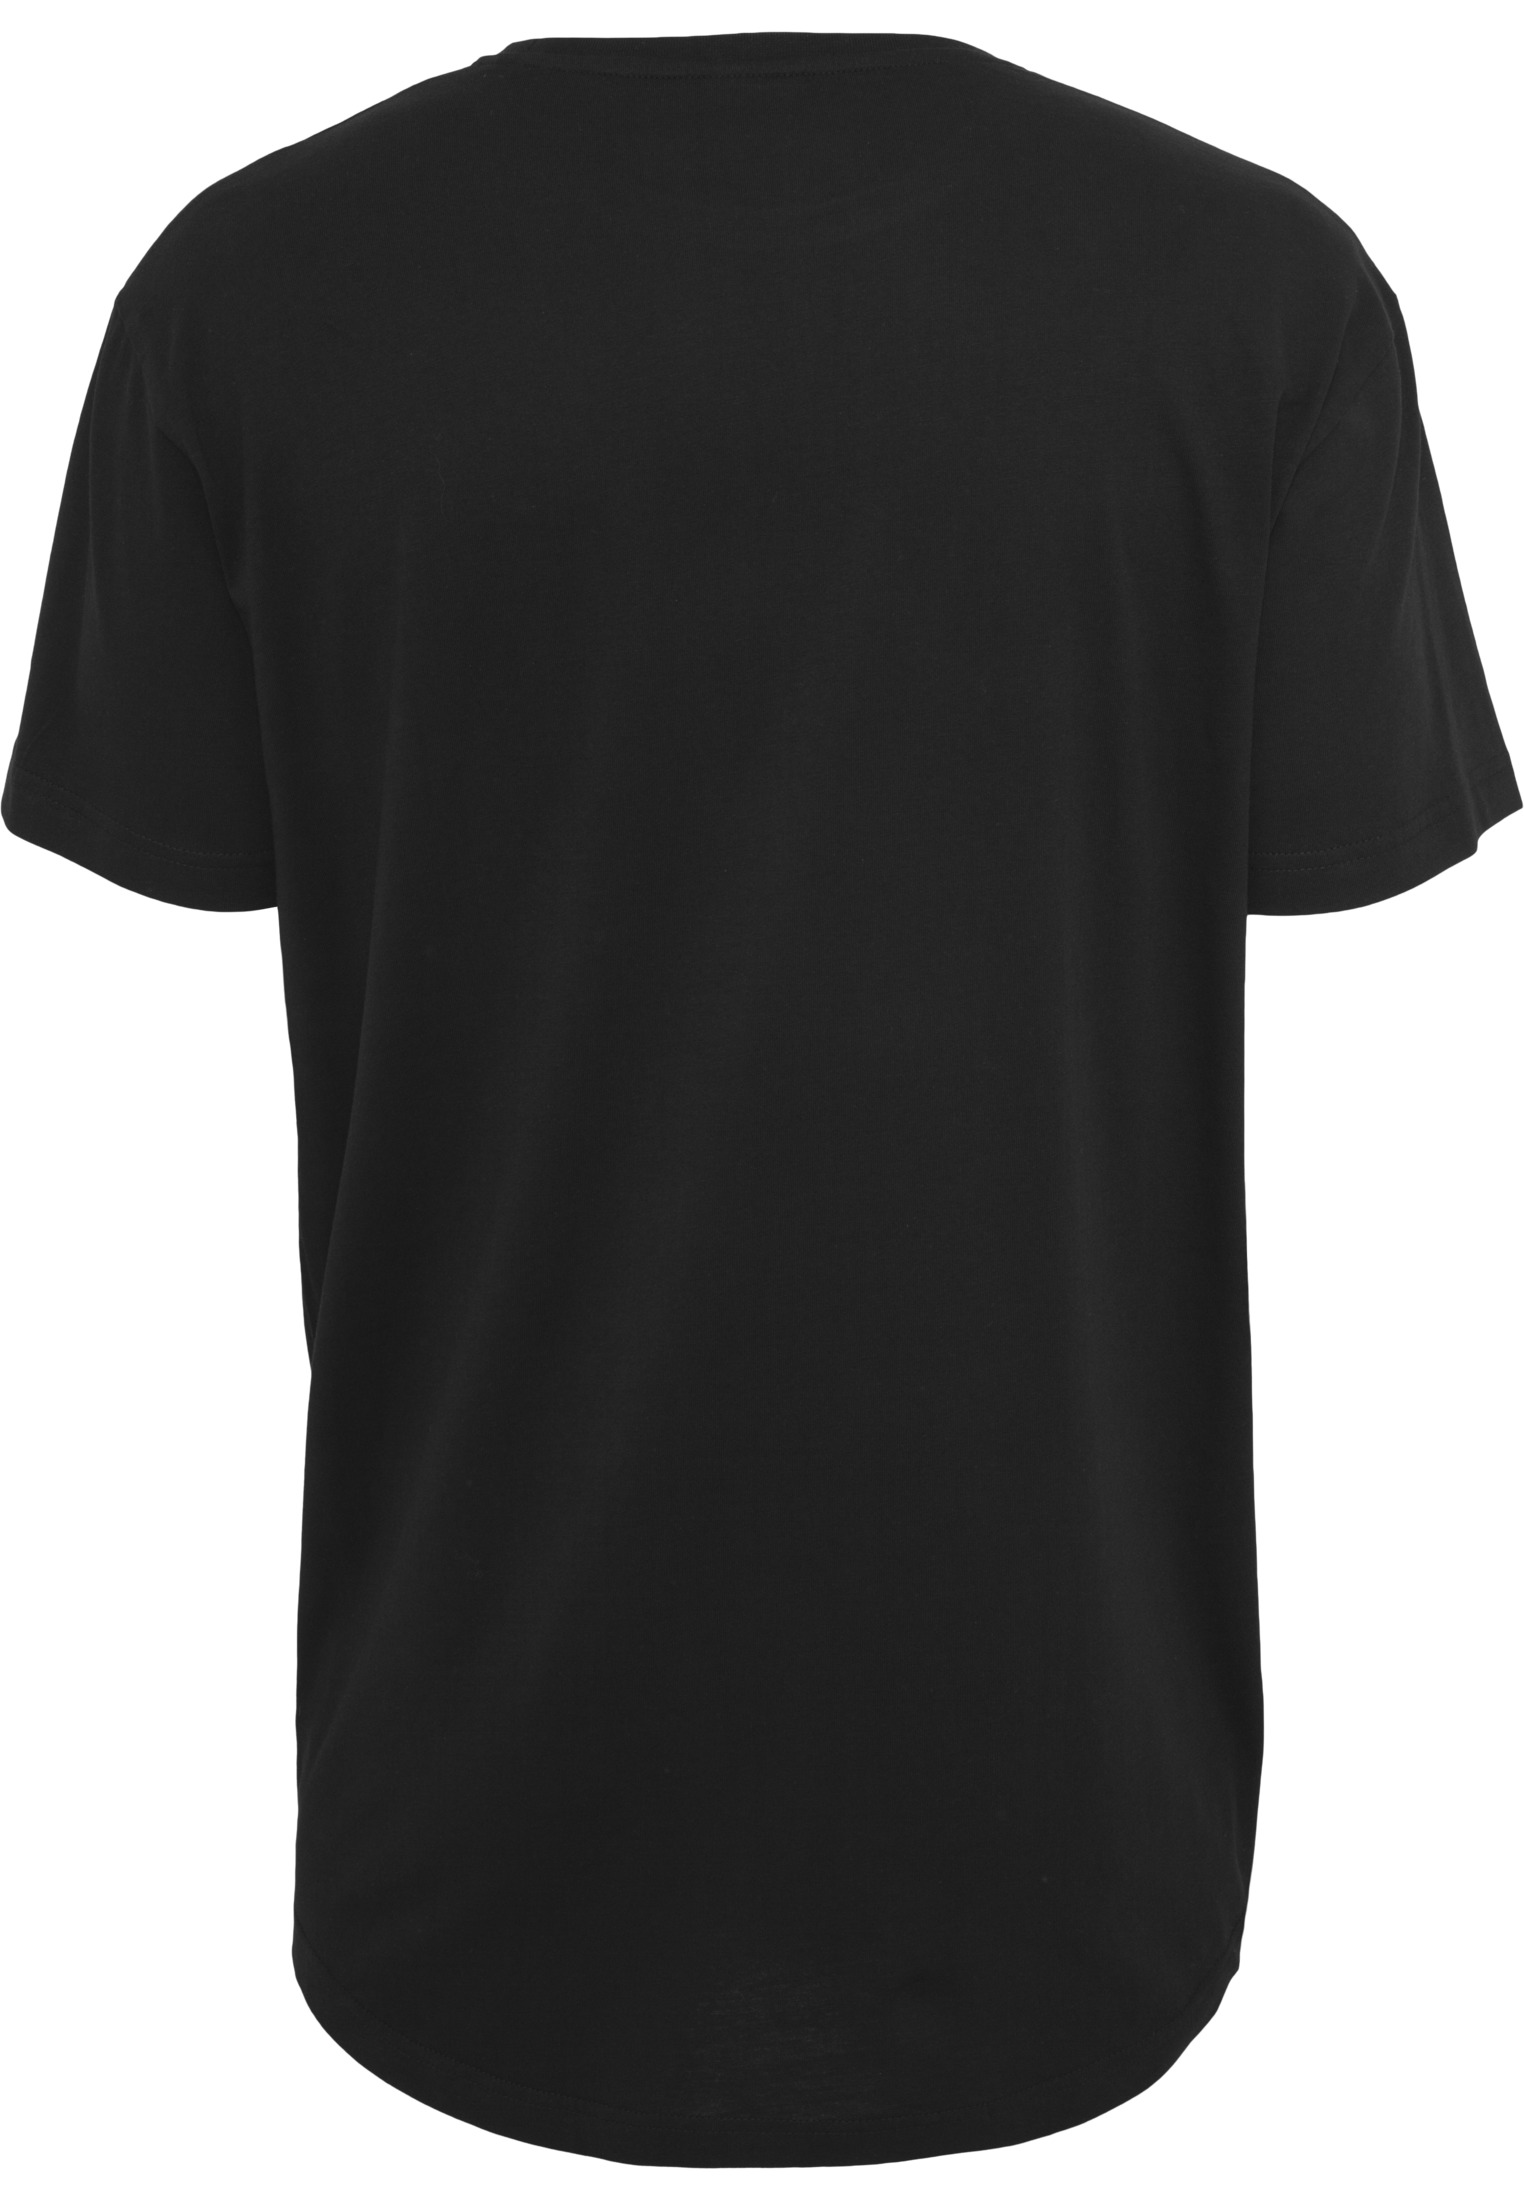 URBAN CLASSICS Shaped Long Tee T-Shirt schwarz XXL